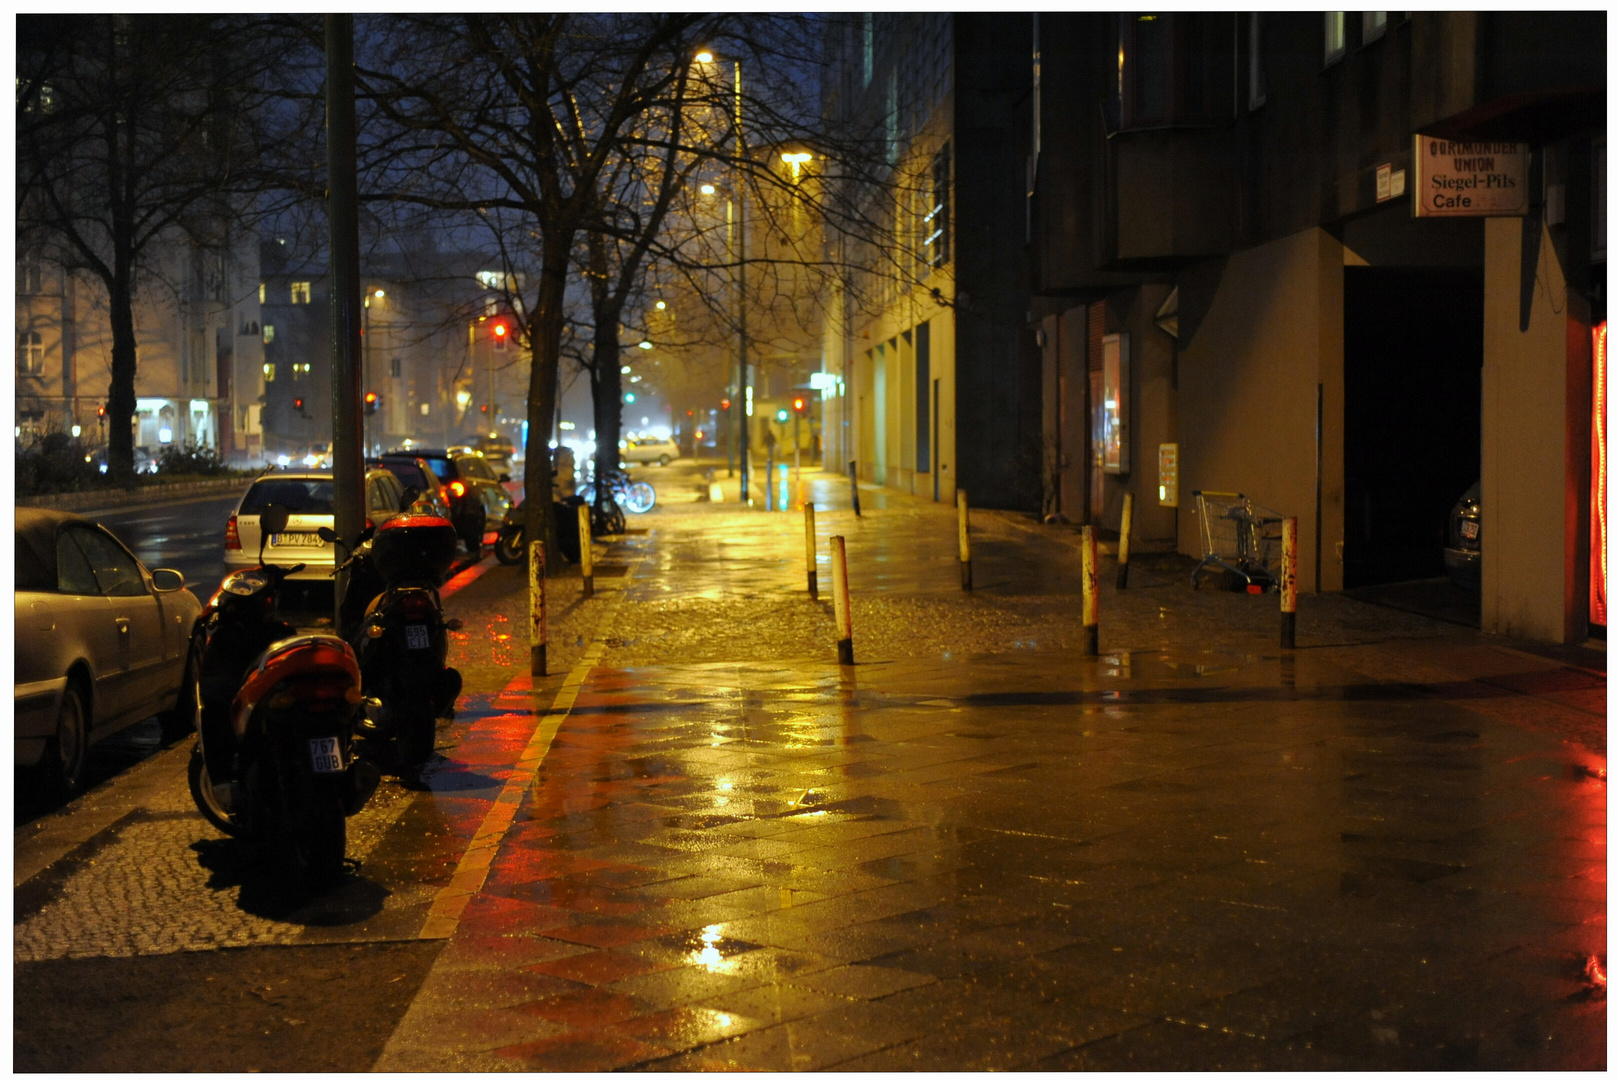 Berlín, tiempo lluvioso II (Regenwetter II)